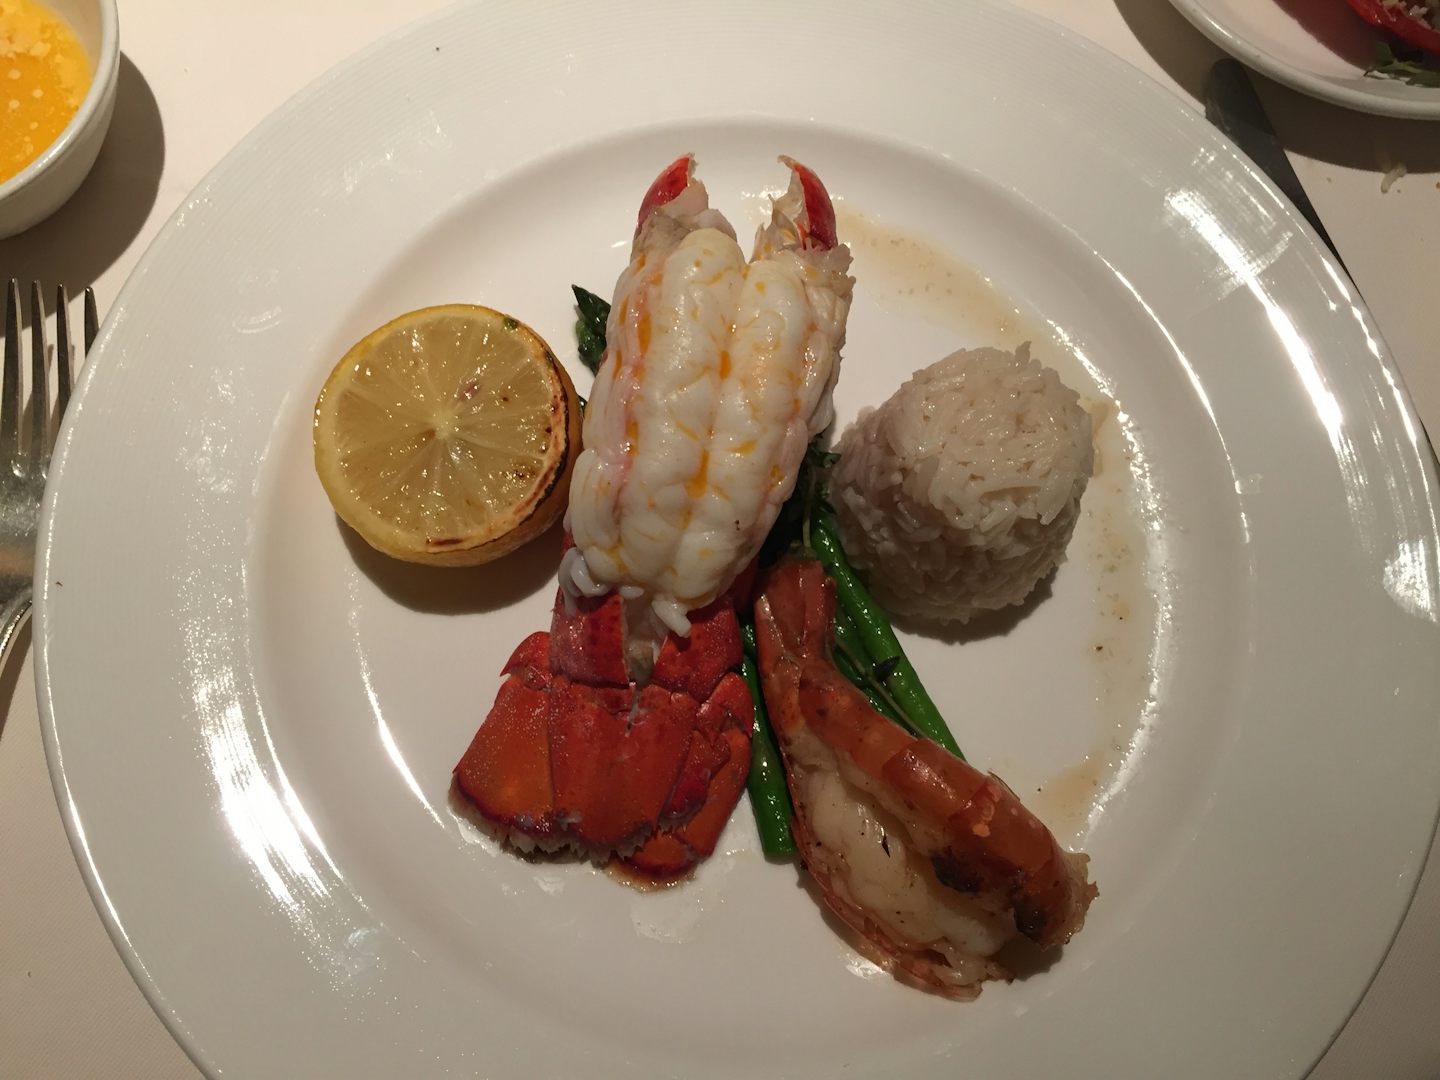 Lobster and prawn dinner on last formal night